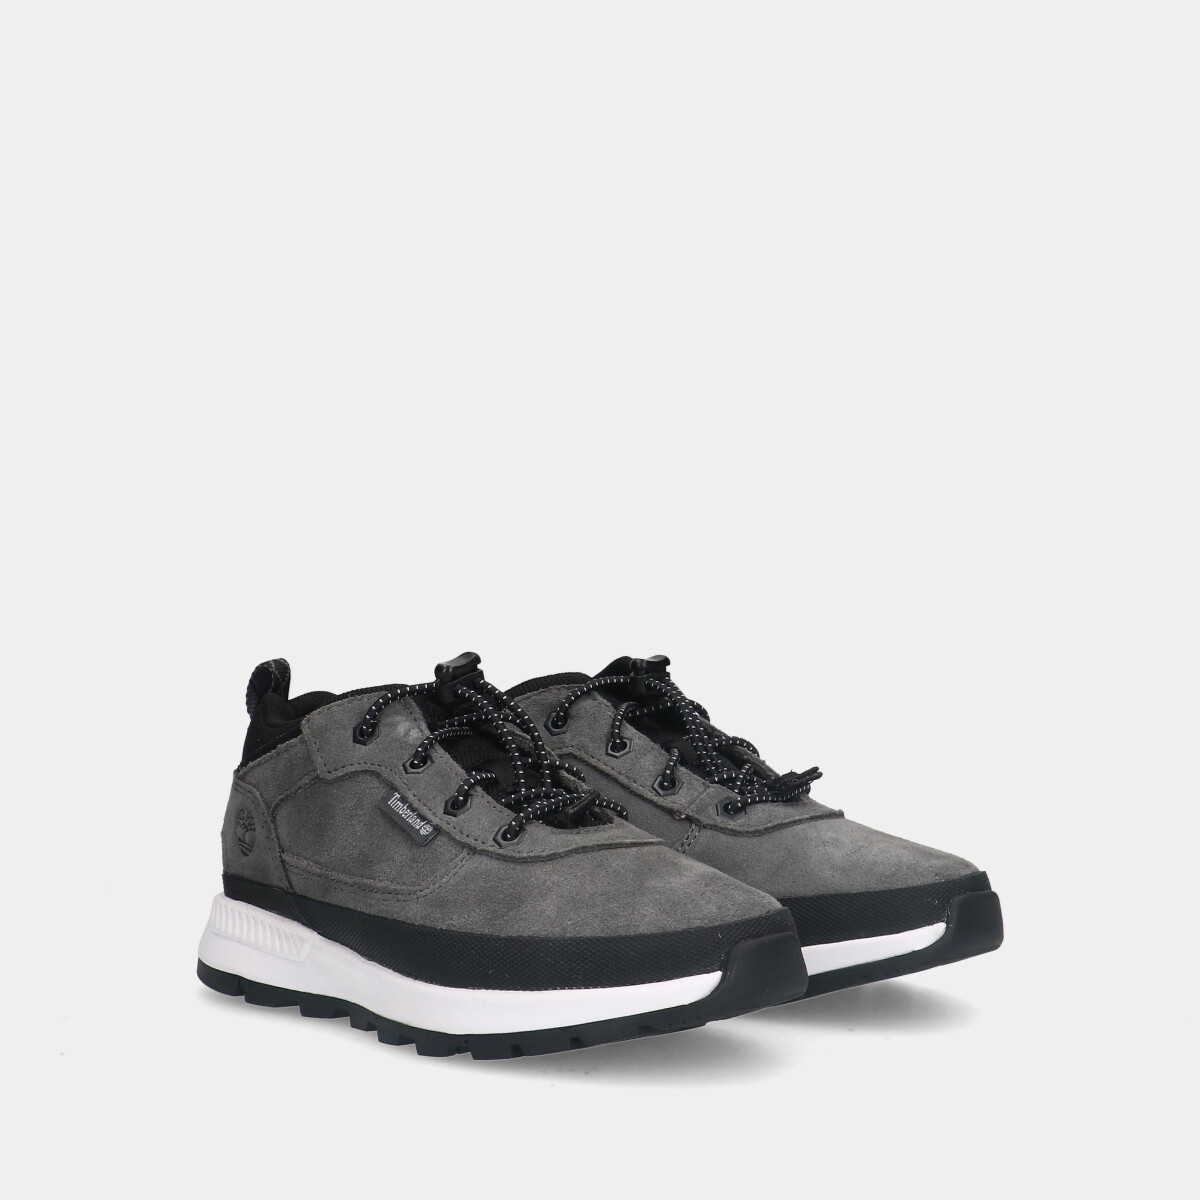 Timberland Field Trekker Grey/Black kleuter sneakers